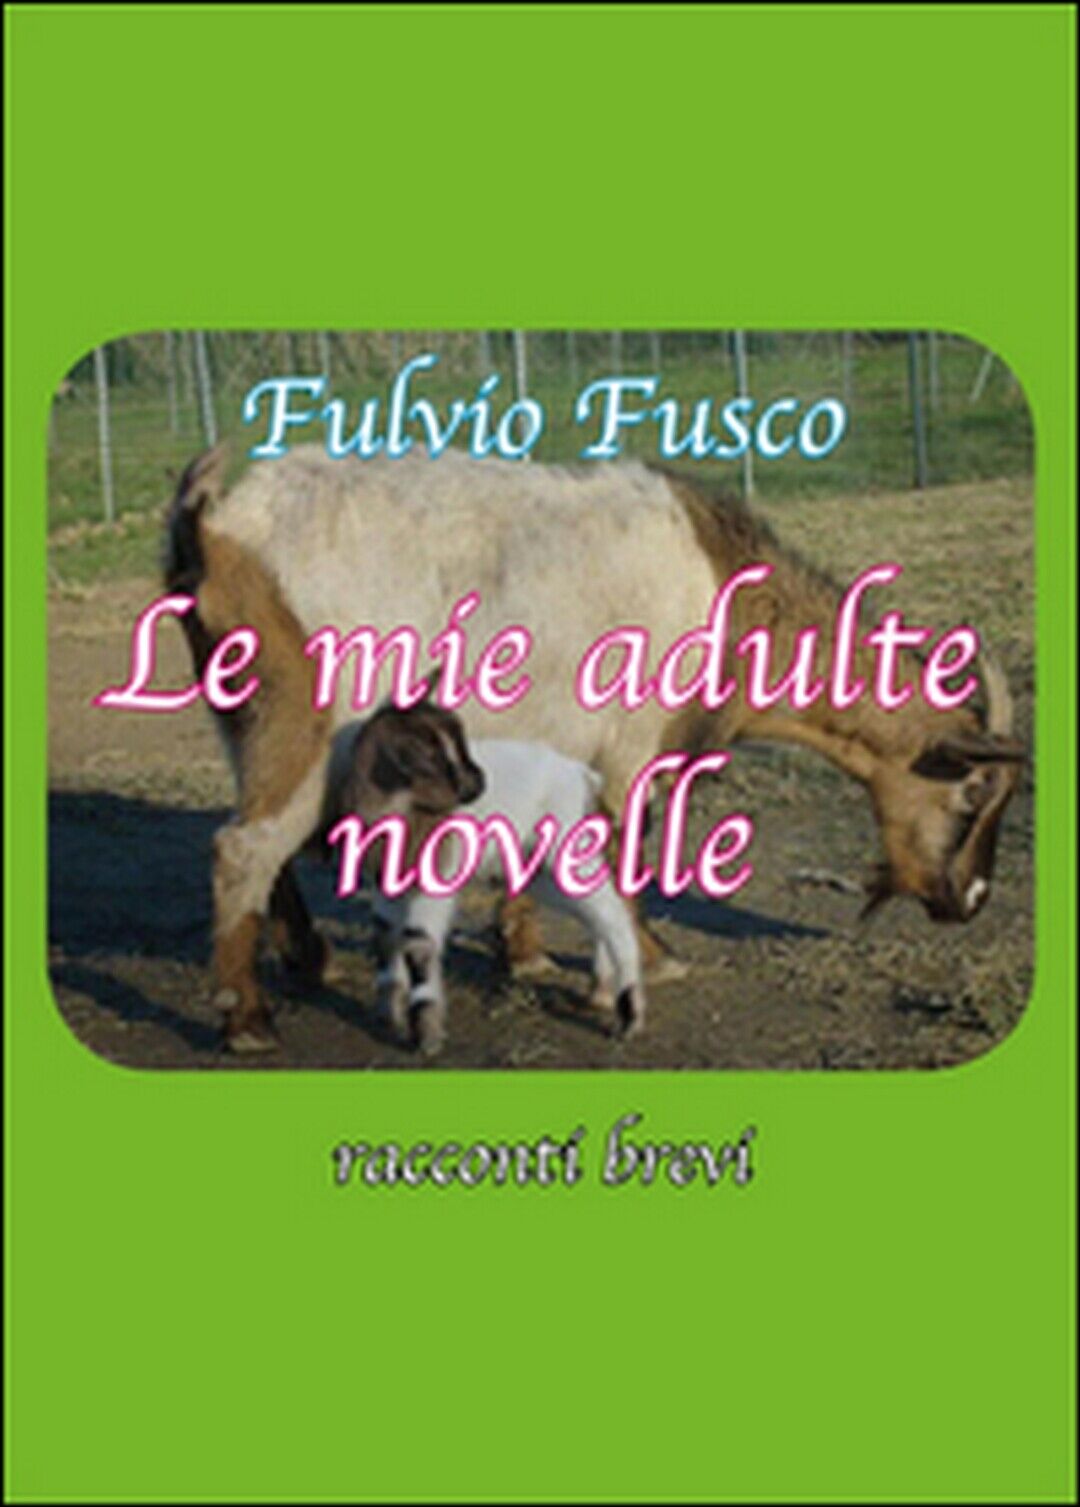 Le mie adulte novelle  di Fulvio Fusco,  2015,  Youcanprint libro usato